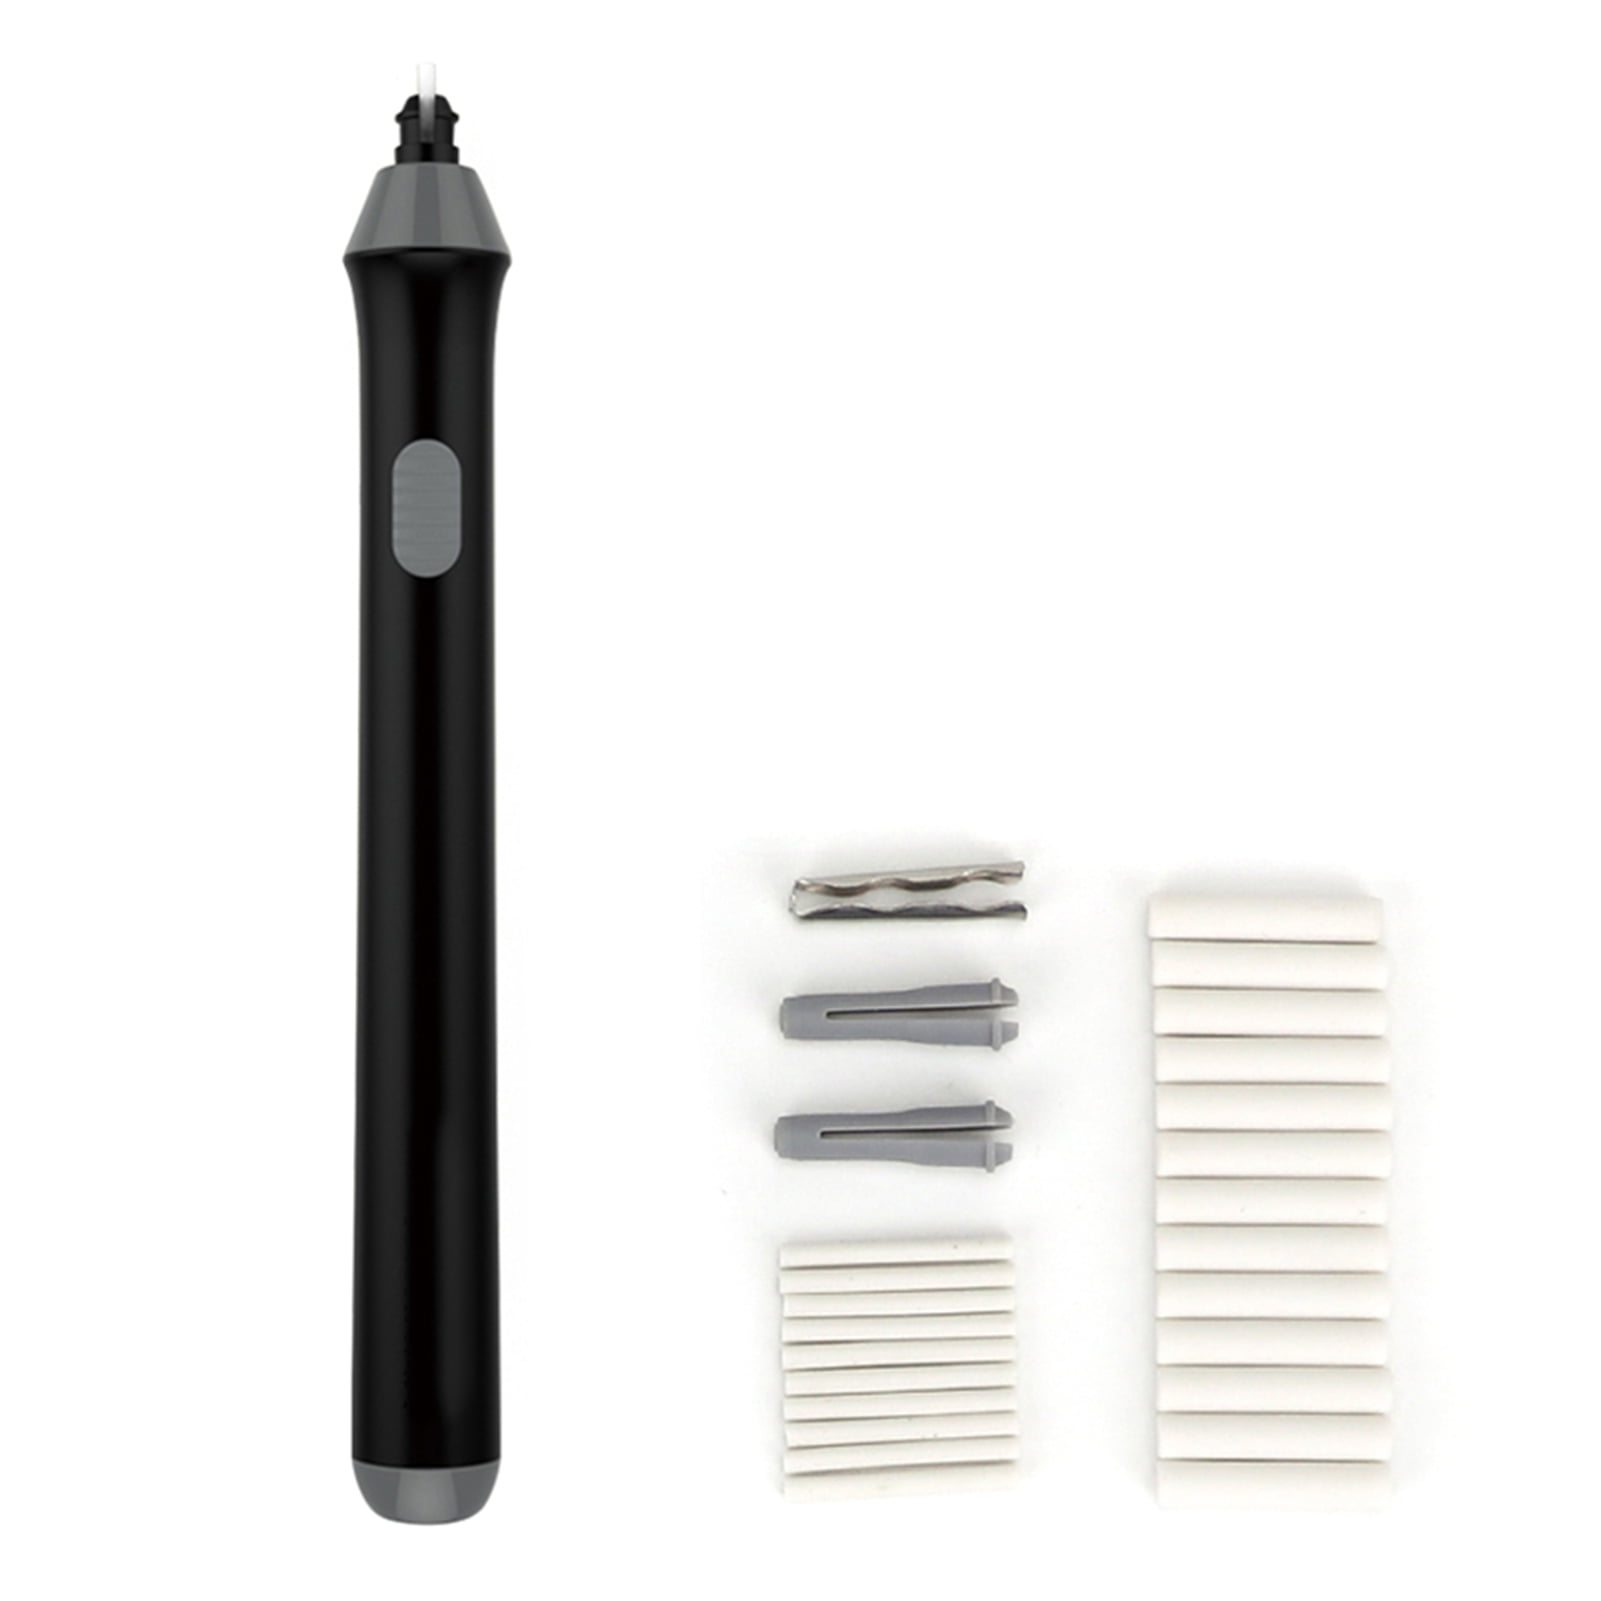 Floepx Home Adjustable Auto Eraser Pen with 5mm 2.3mm Eraser Refills ...